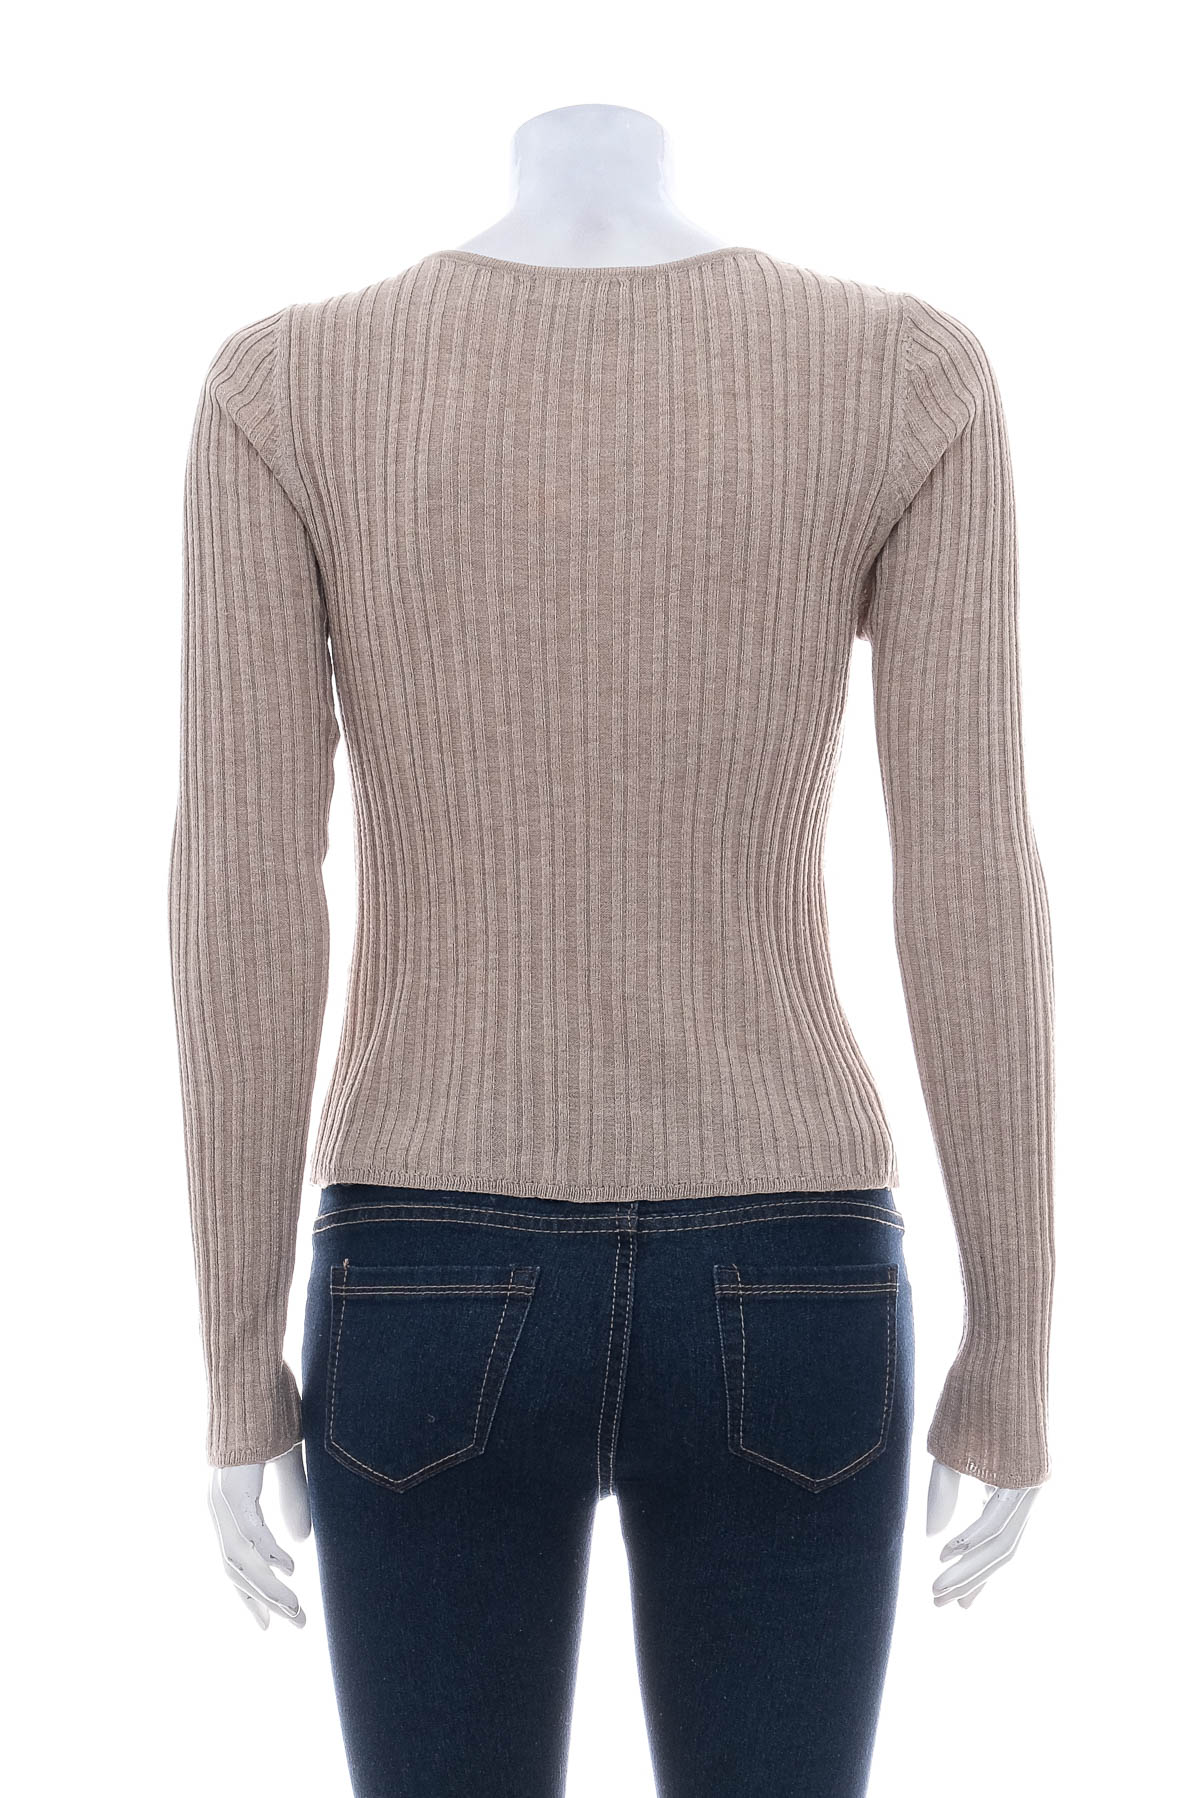 Women's sweater - Asos - 1